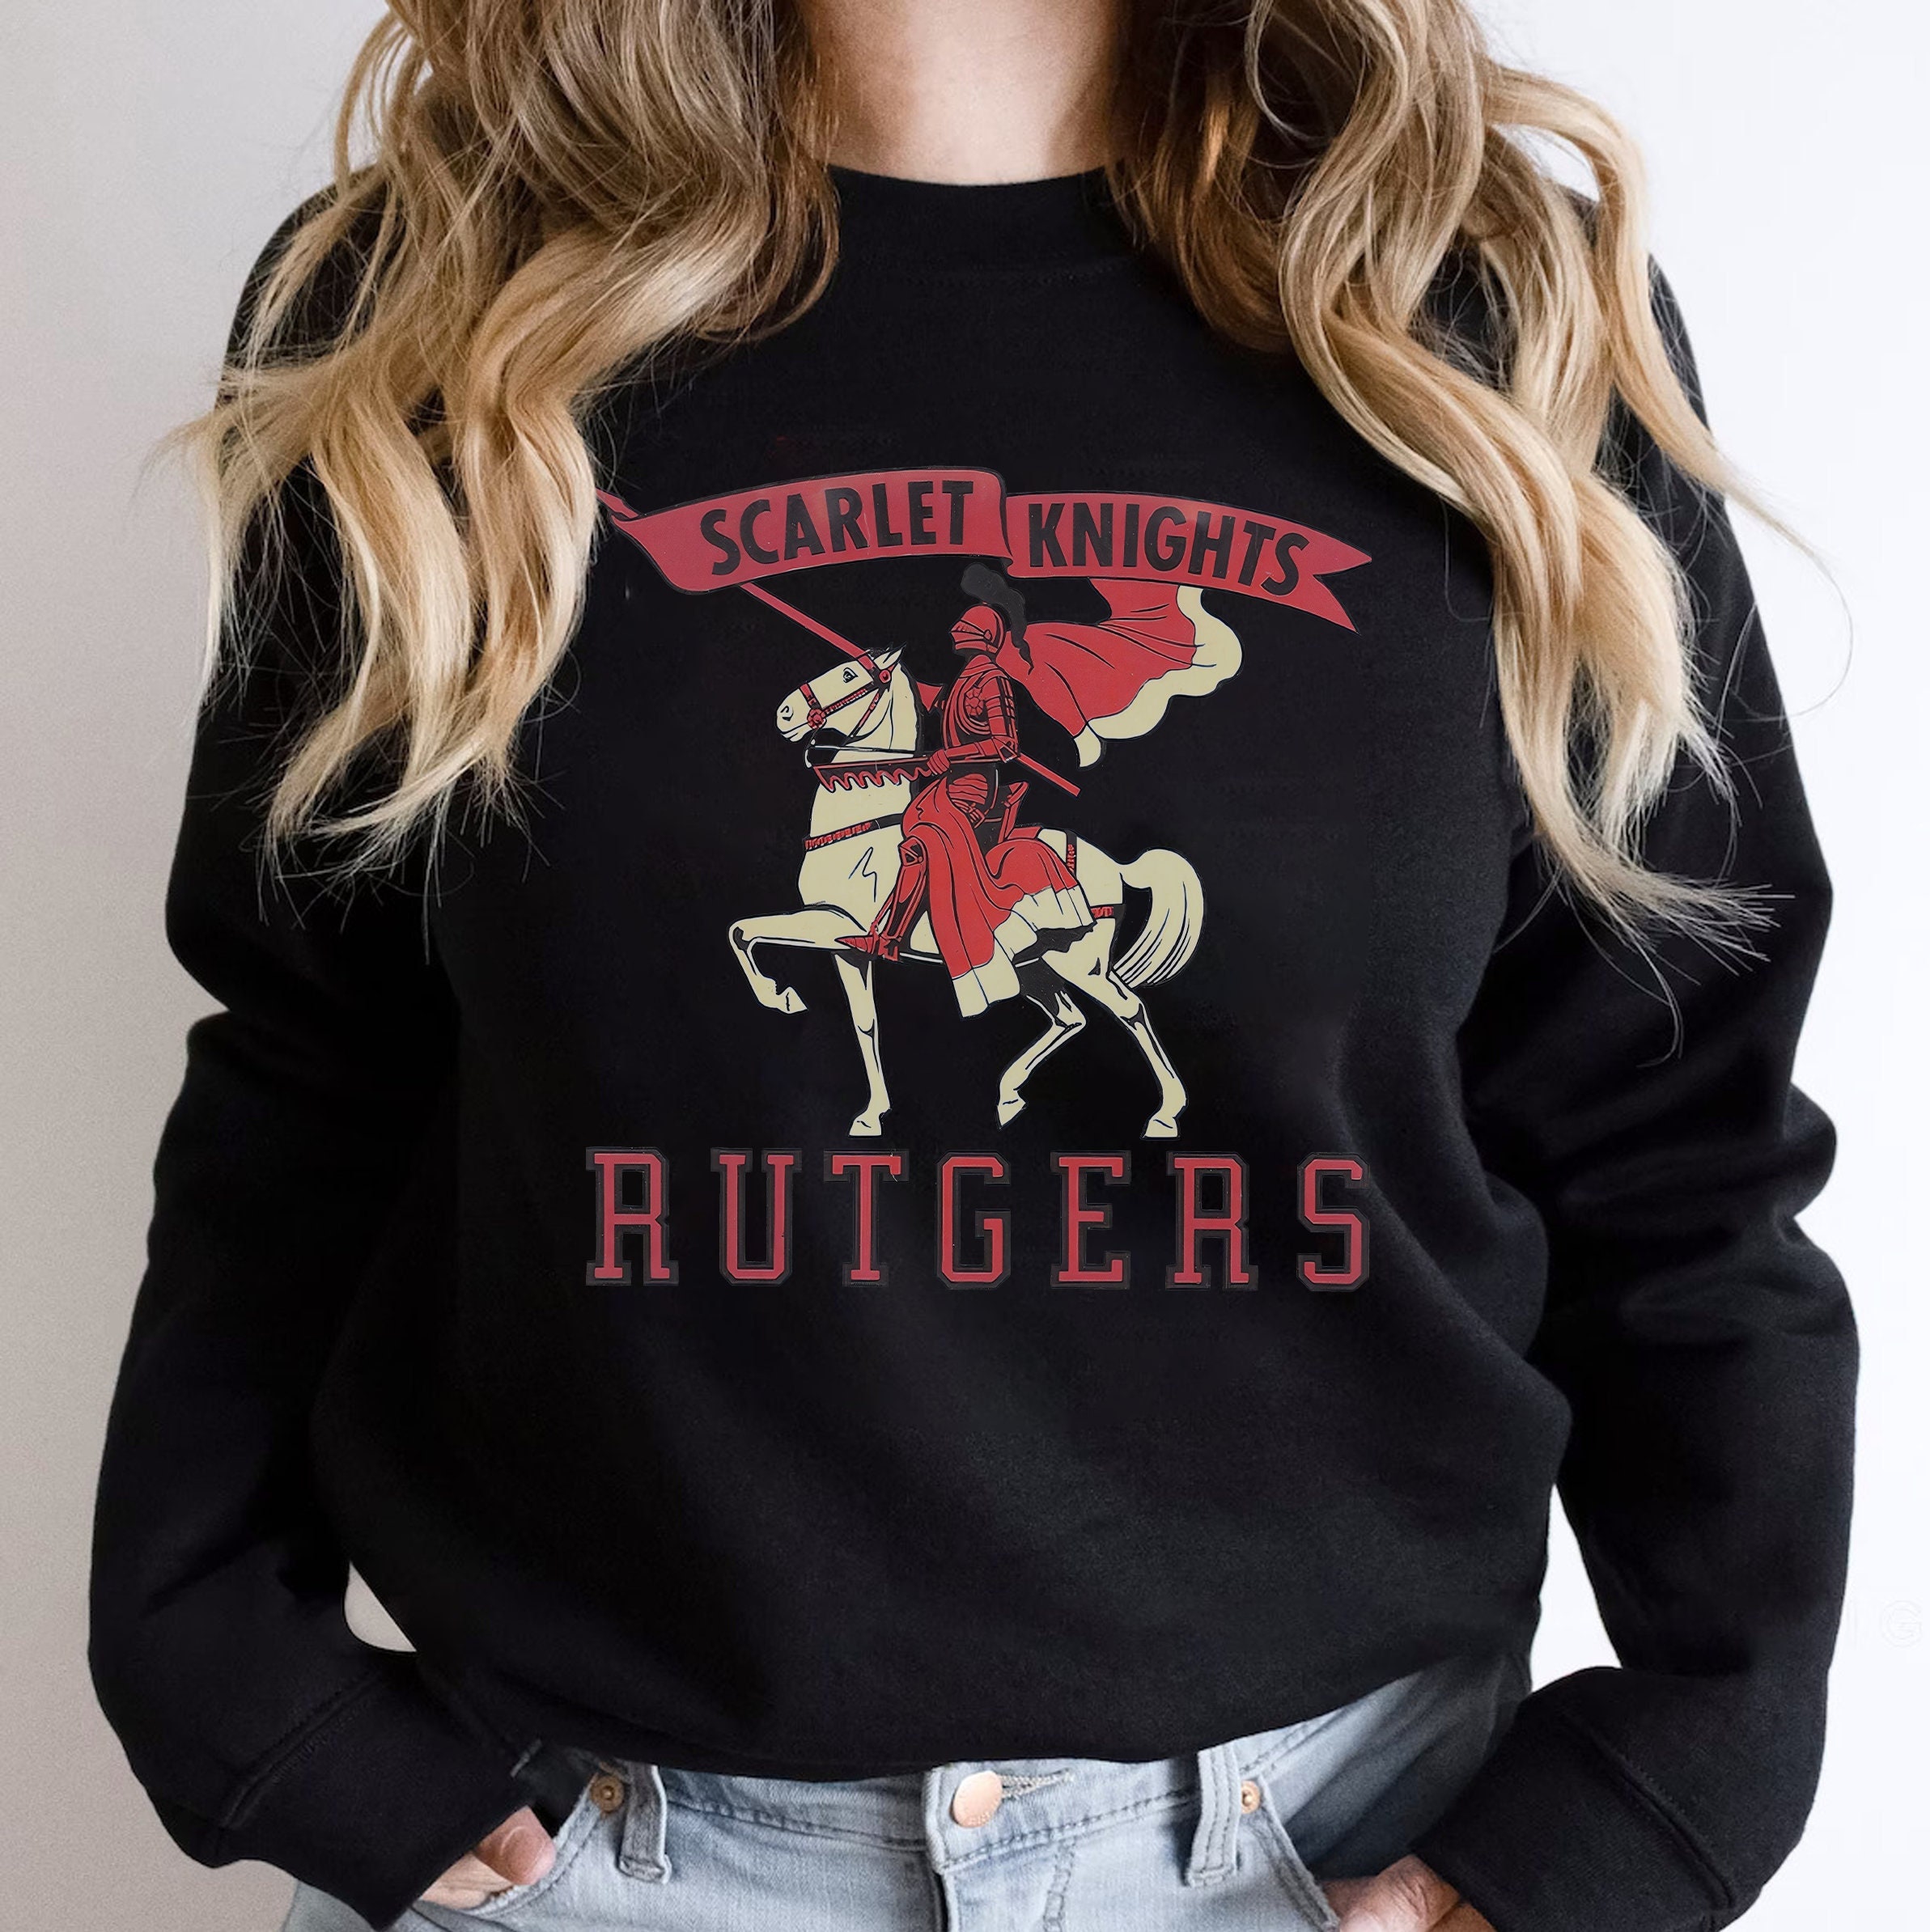 Rutgers Scarlet Knights softball cap